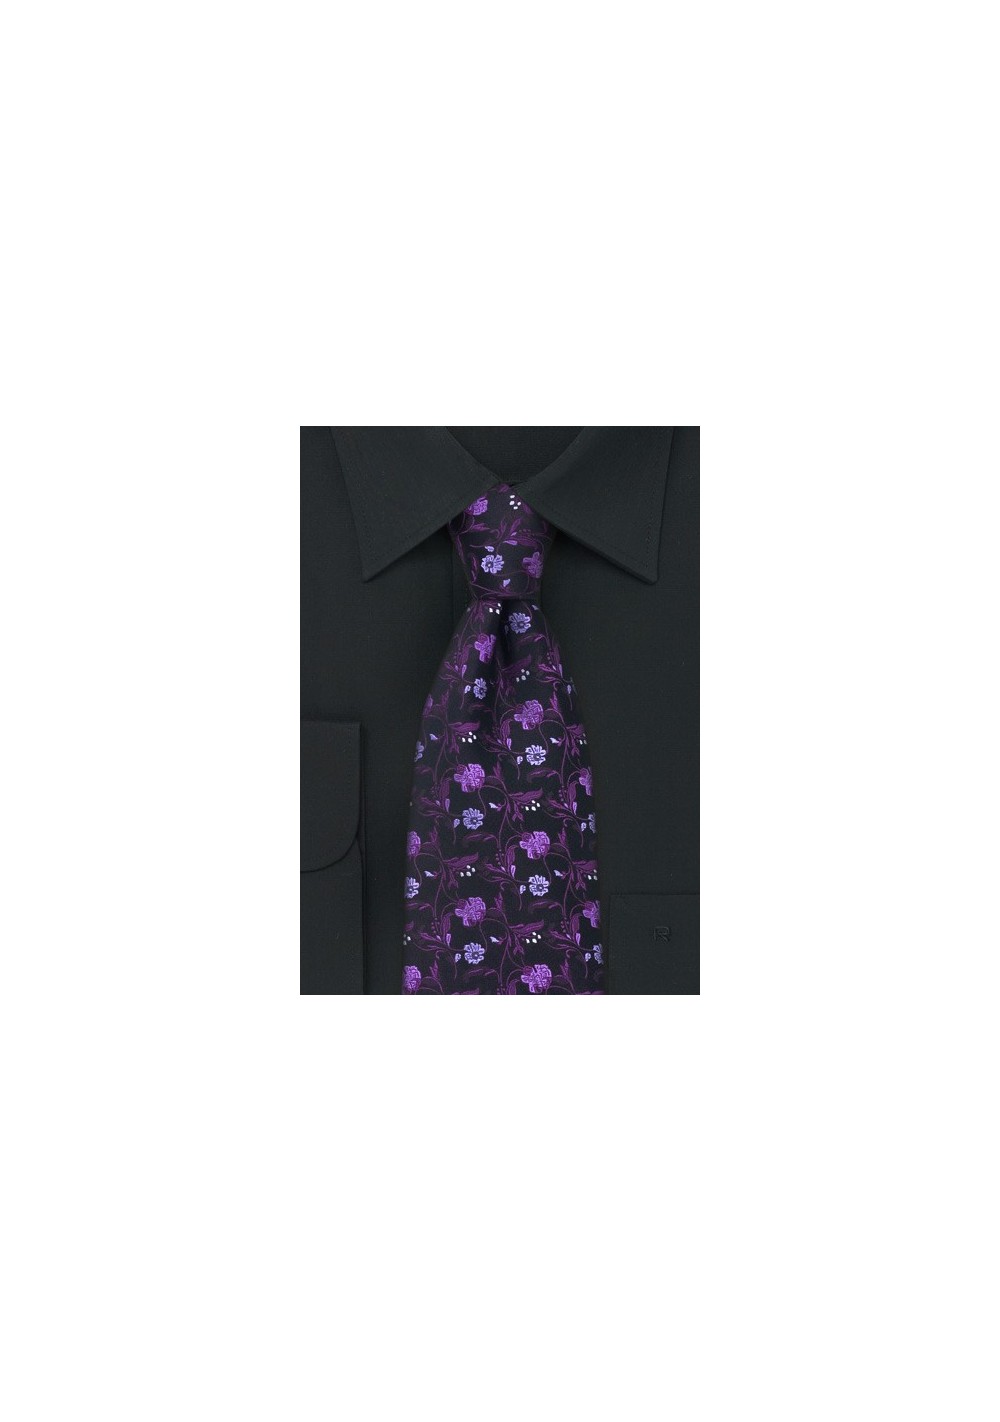 Black Tie with Violet Floral Pattern